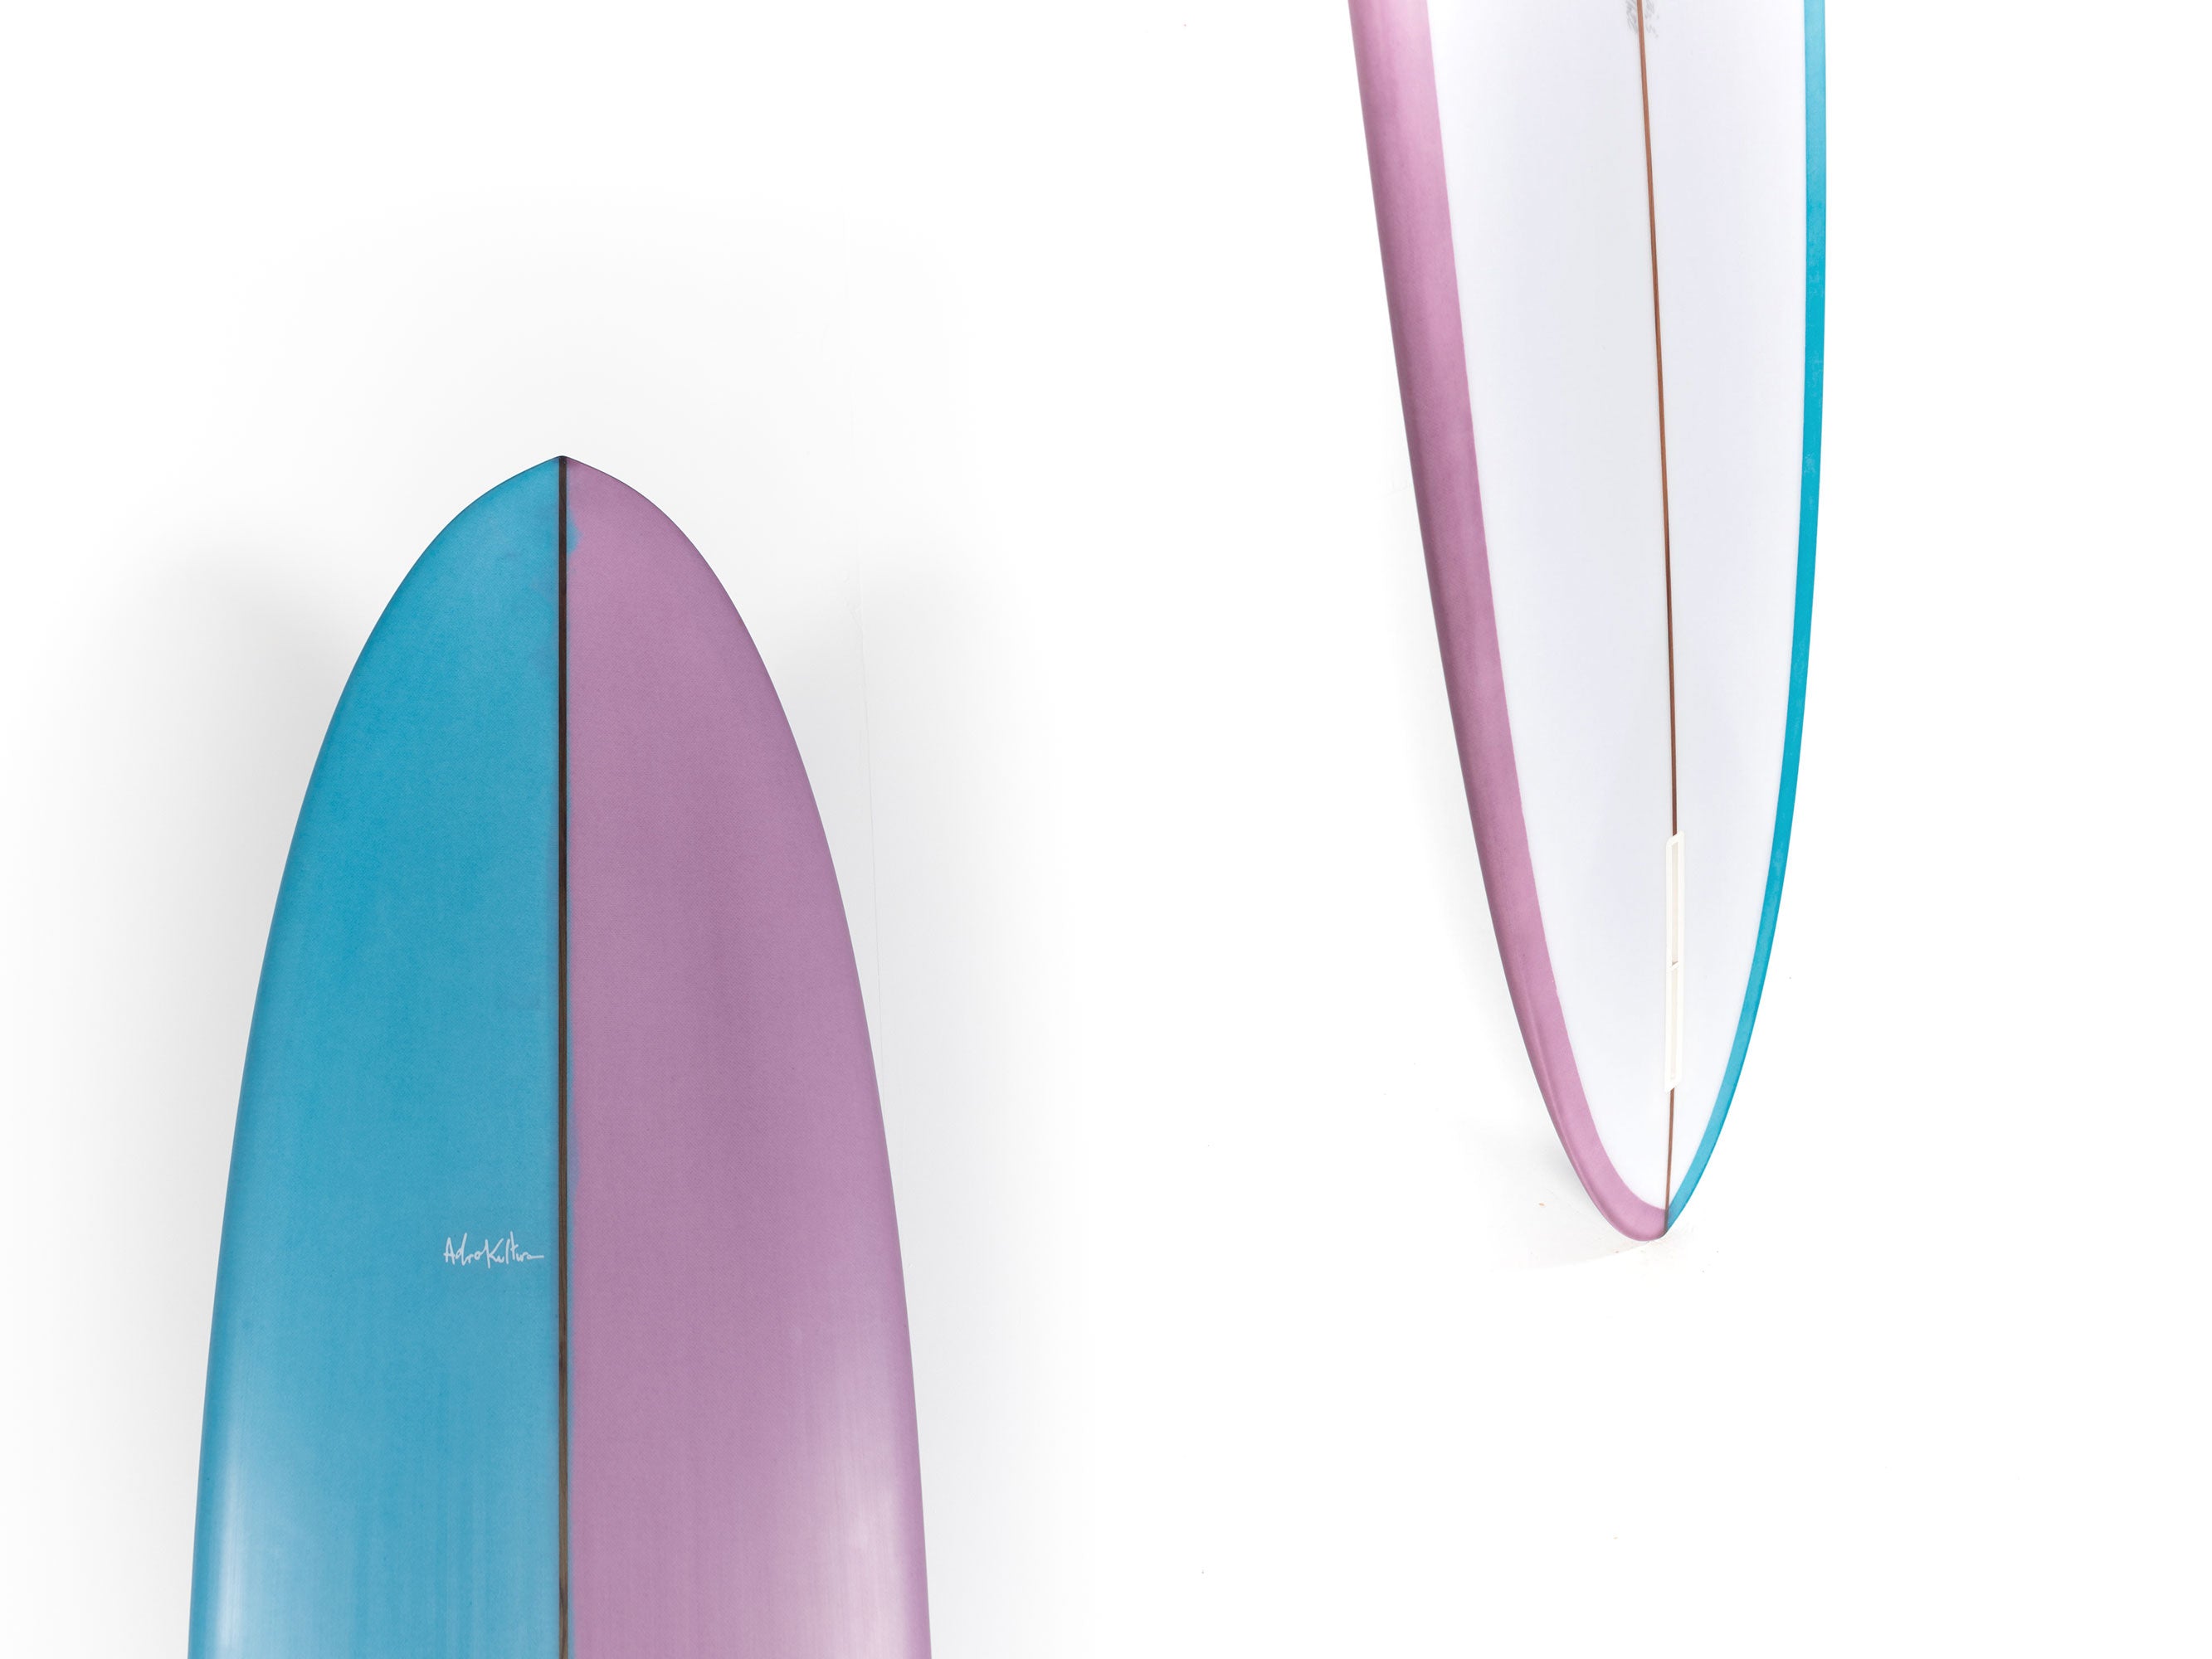 Pukas Surf Shop - Adrokultura Surfboards